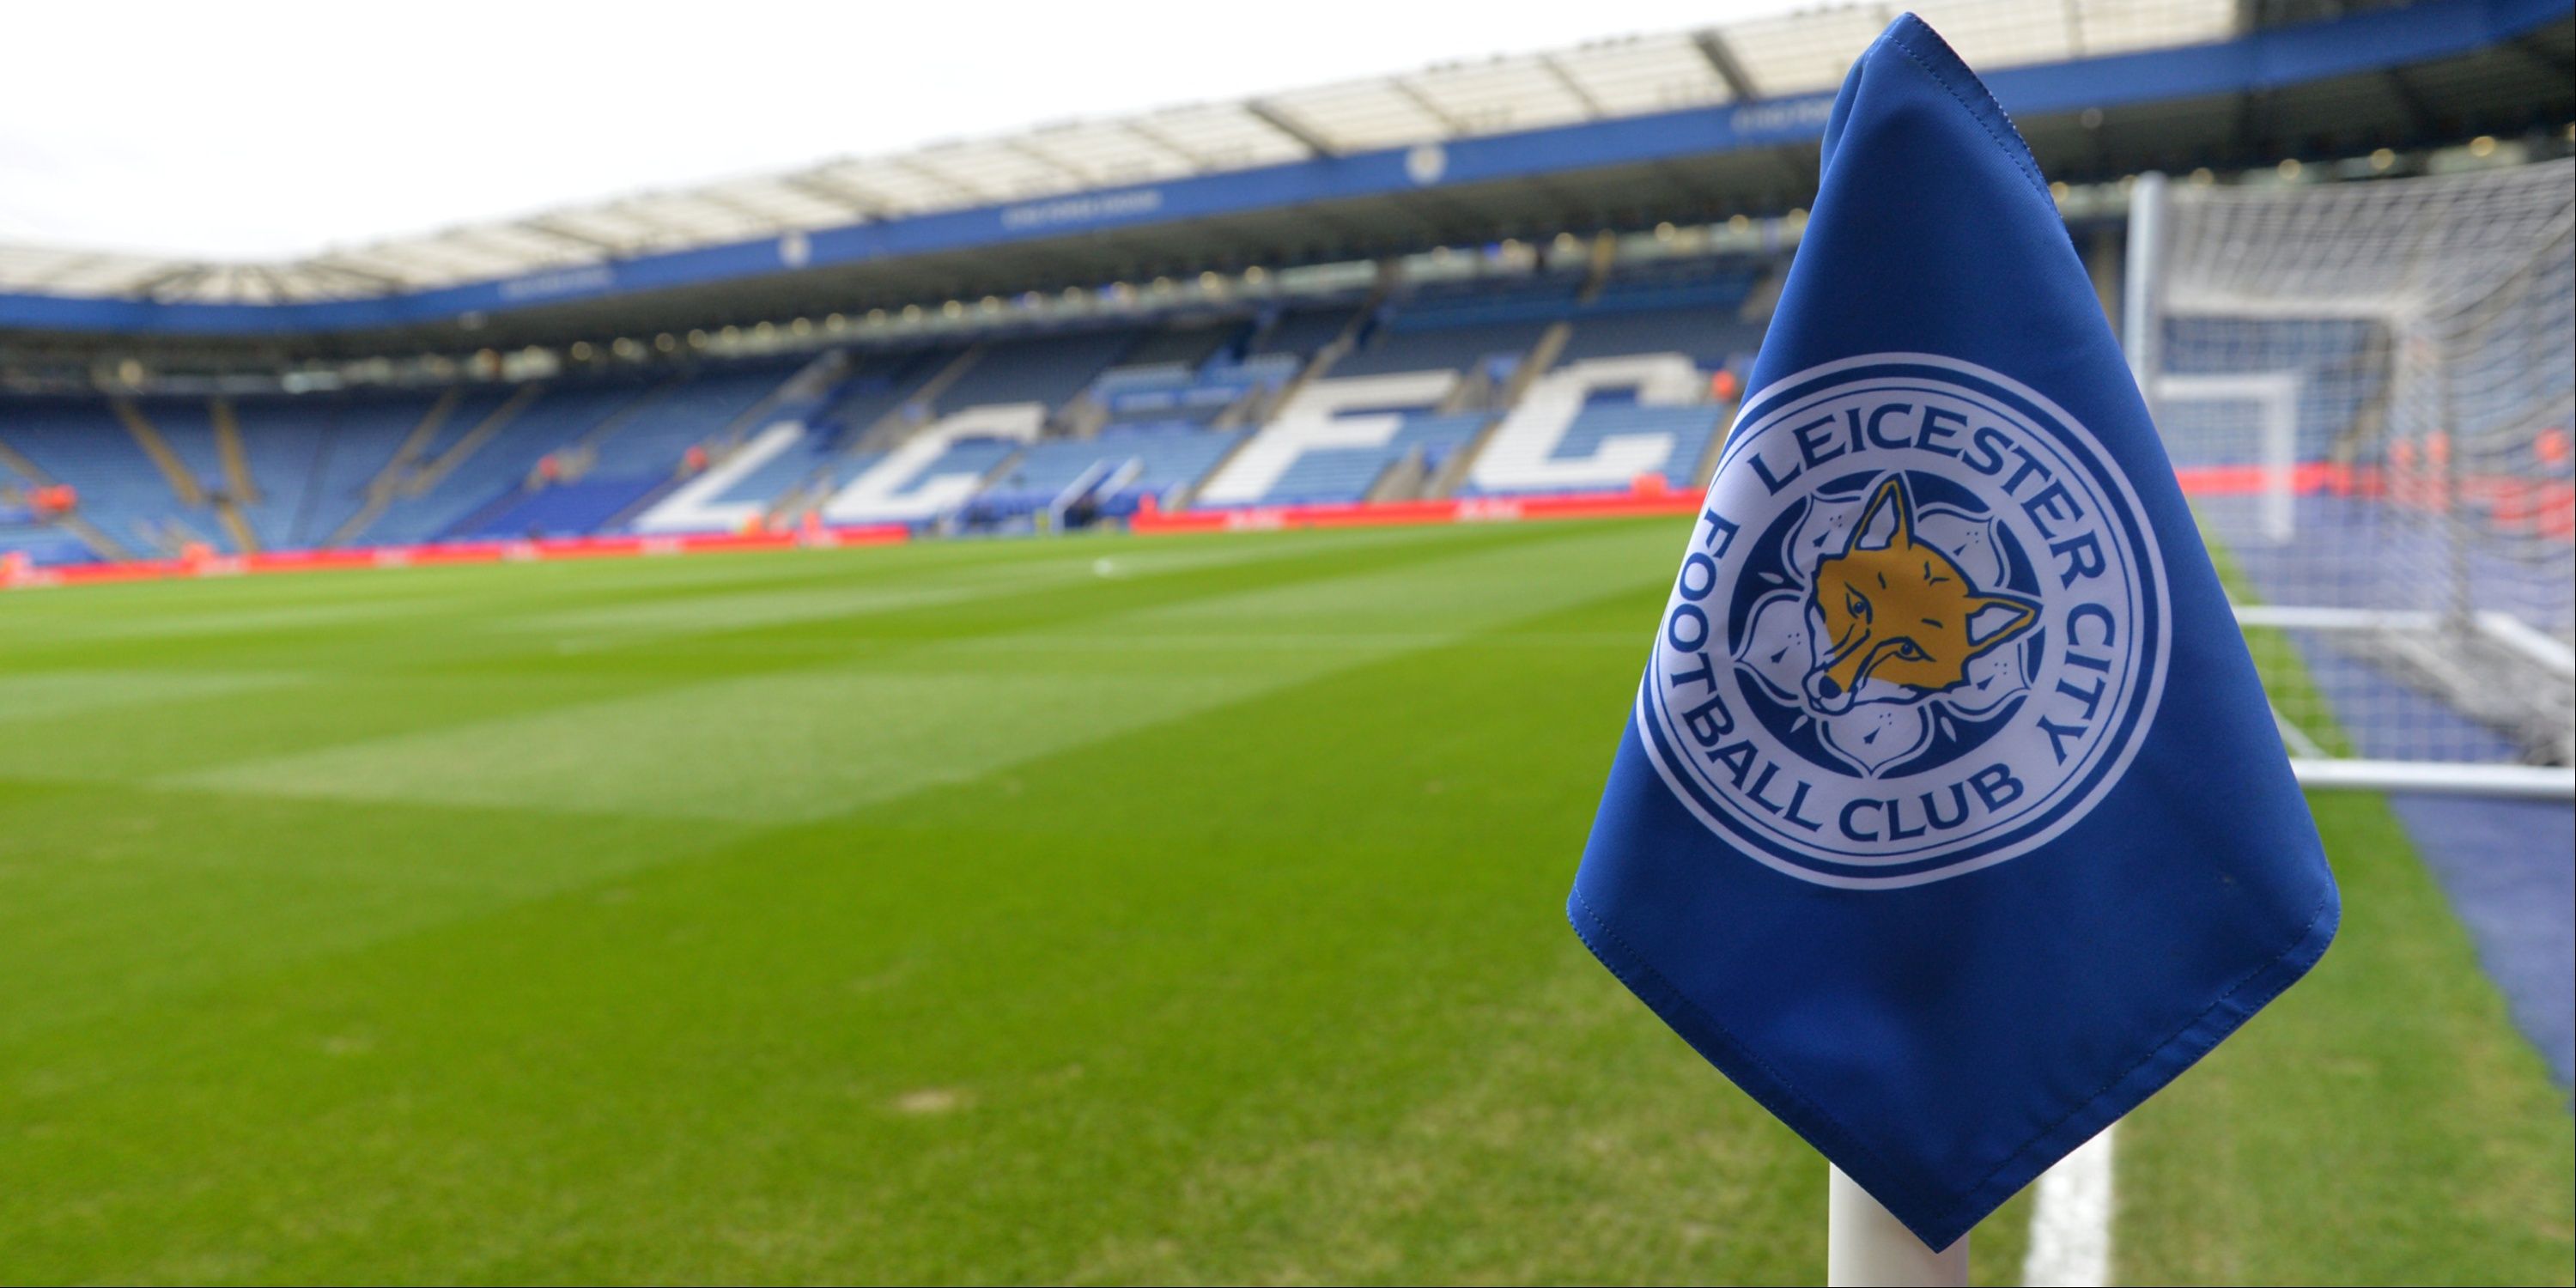 Leicester City corner flag